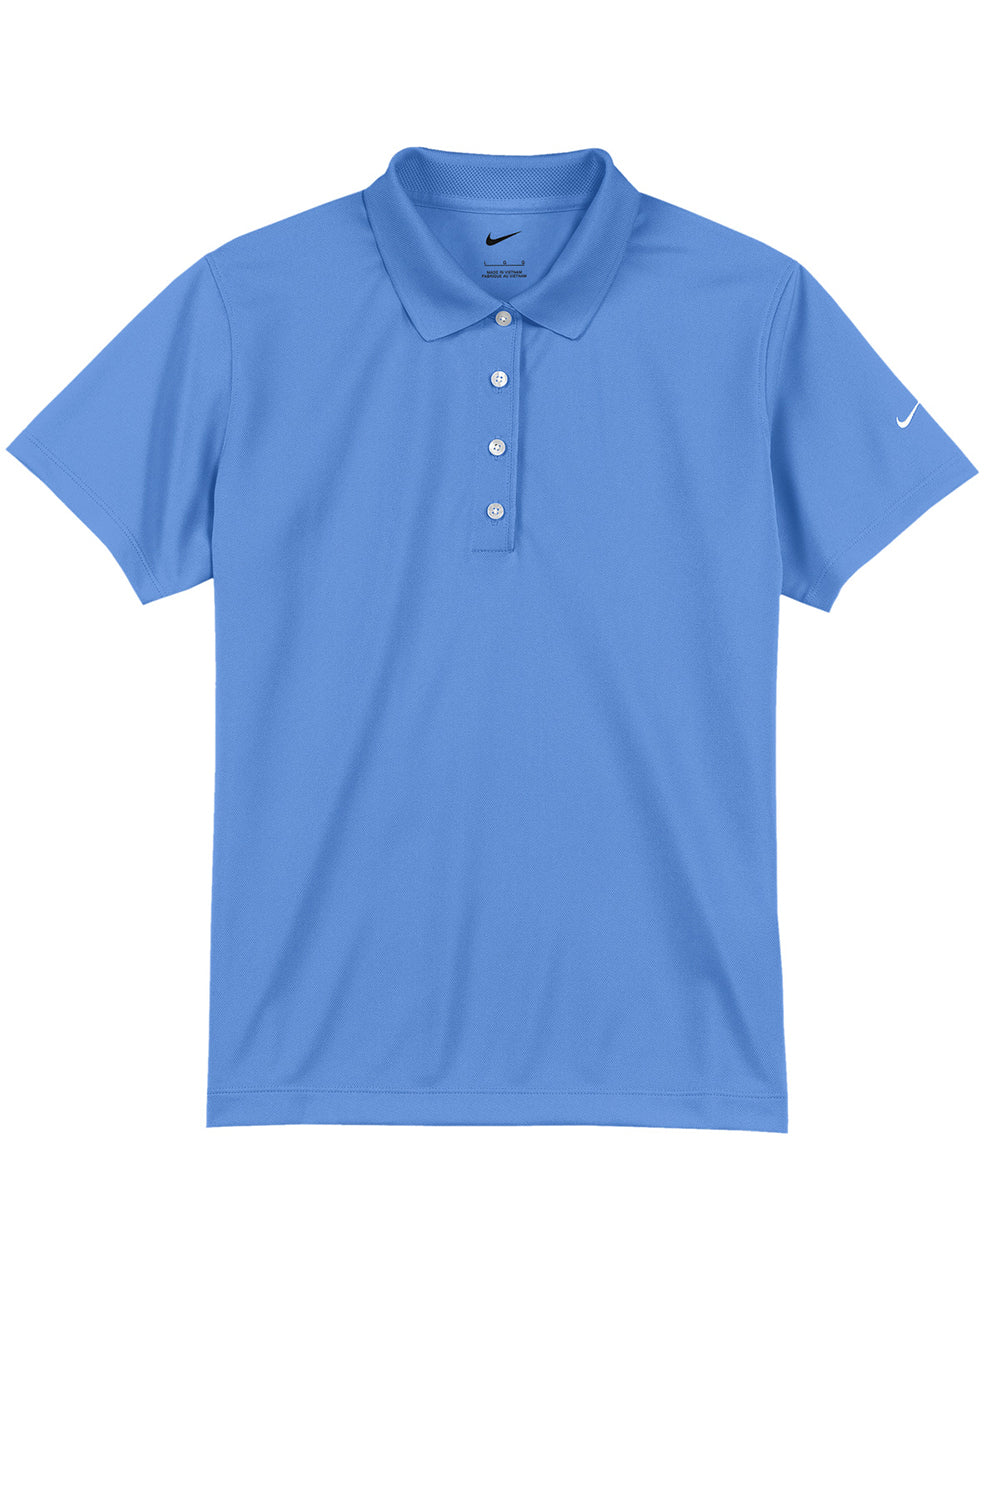 Nike 203697 Womens Tech Basic Dri-Fit Moisture Wicking Short Sleeve Polo Shirt University Blue Flat Front